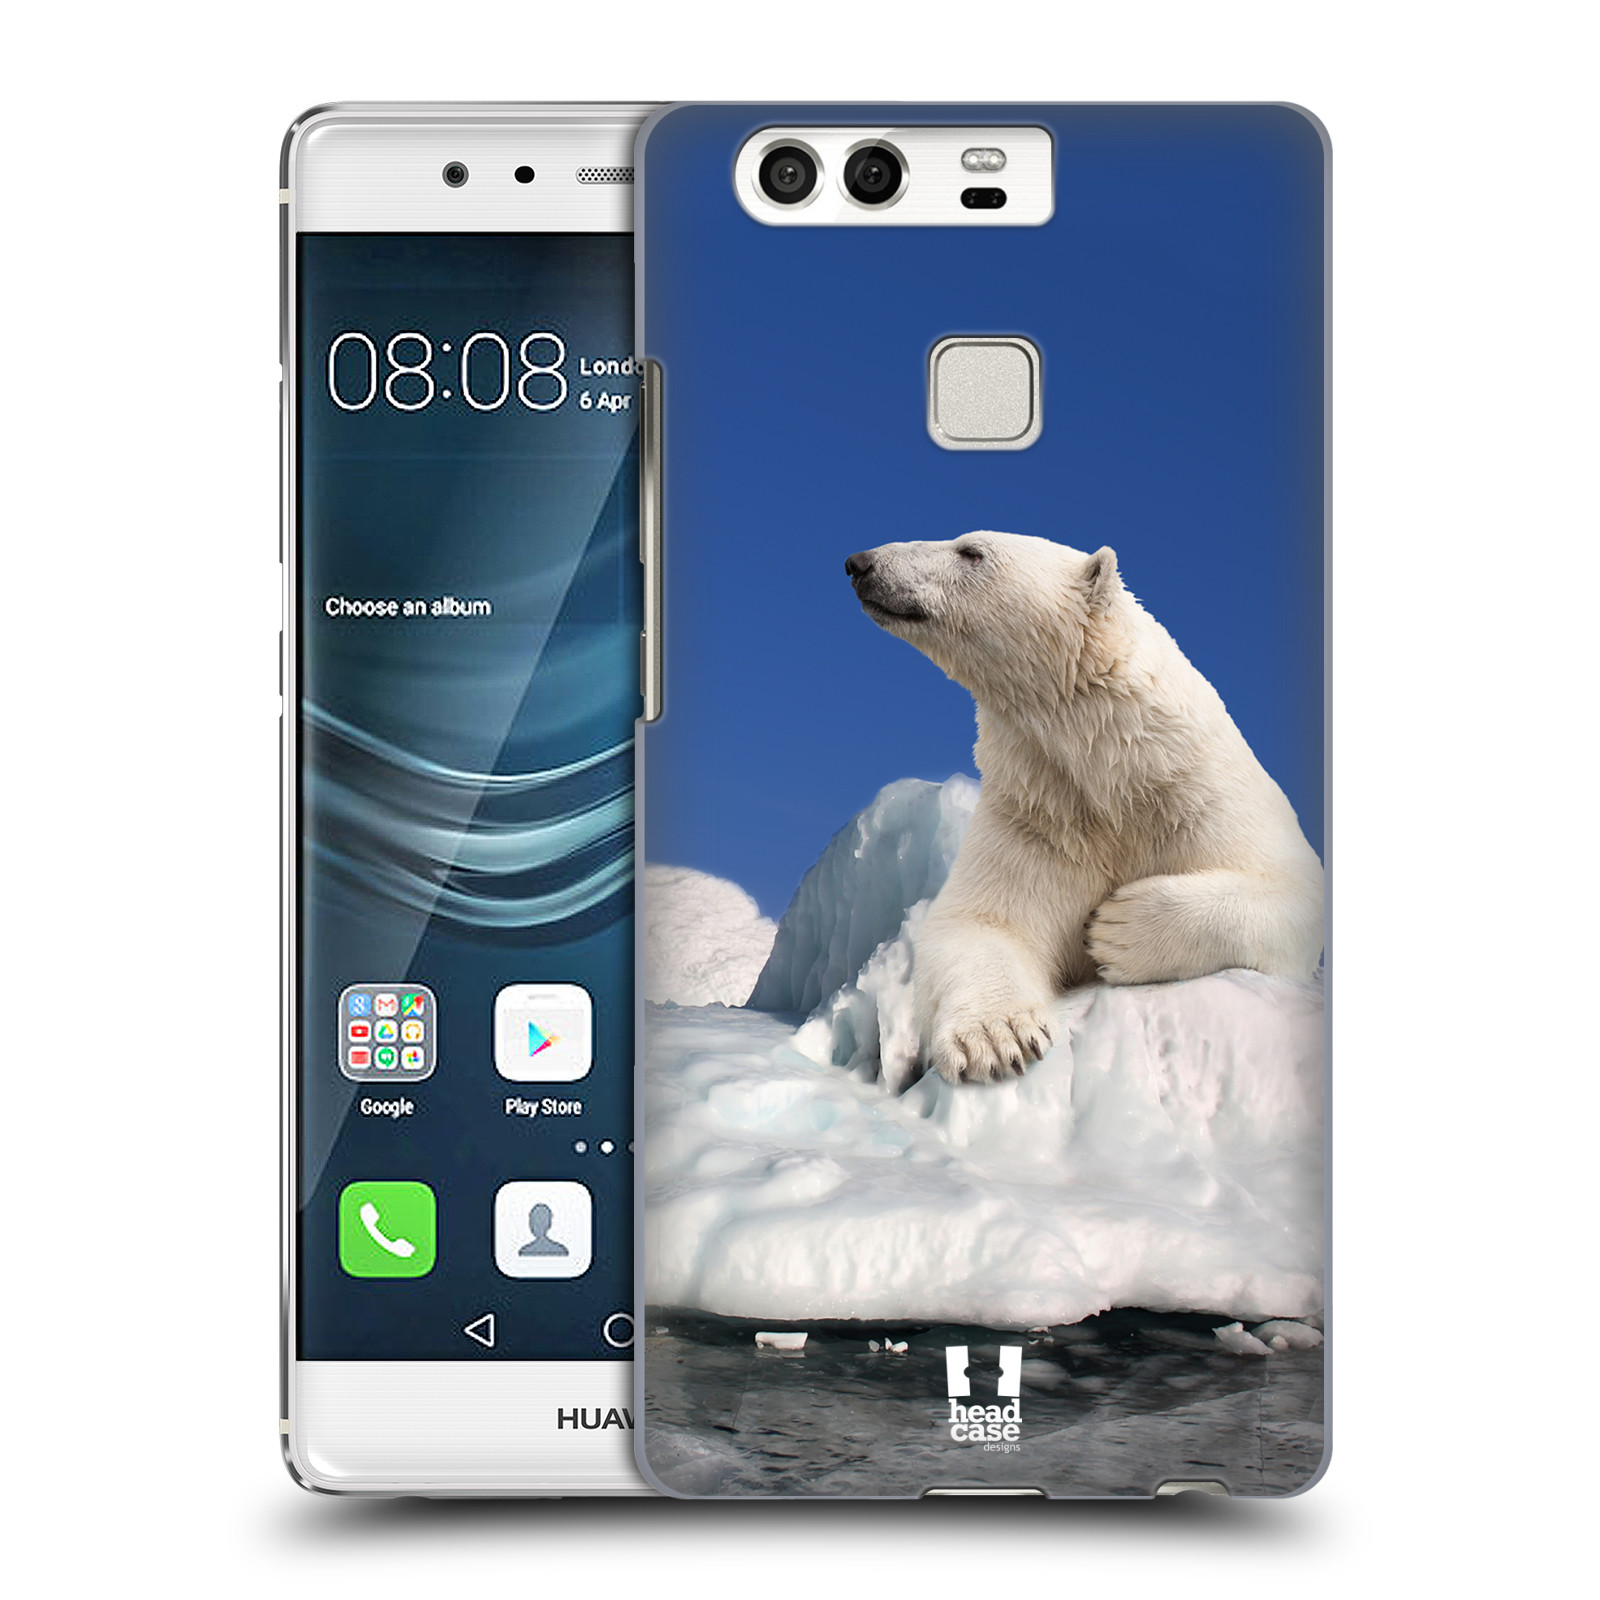 HEAD CASE plastový obal na mobil Huawei P9 / P9 DUAL SIM vzor Divočina, Divoký život a zvířata foto LEDNÍ MEDVĚD NA LEDOVCI A NEBE MODRÁ